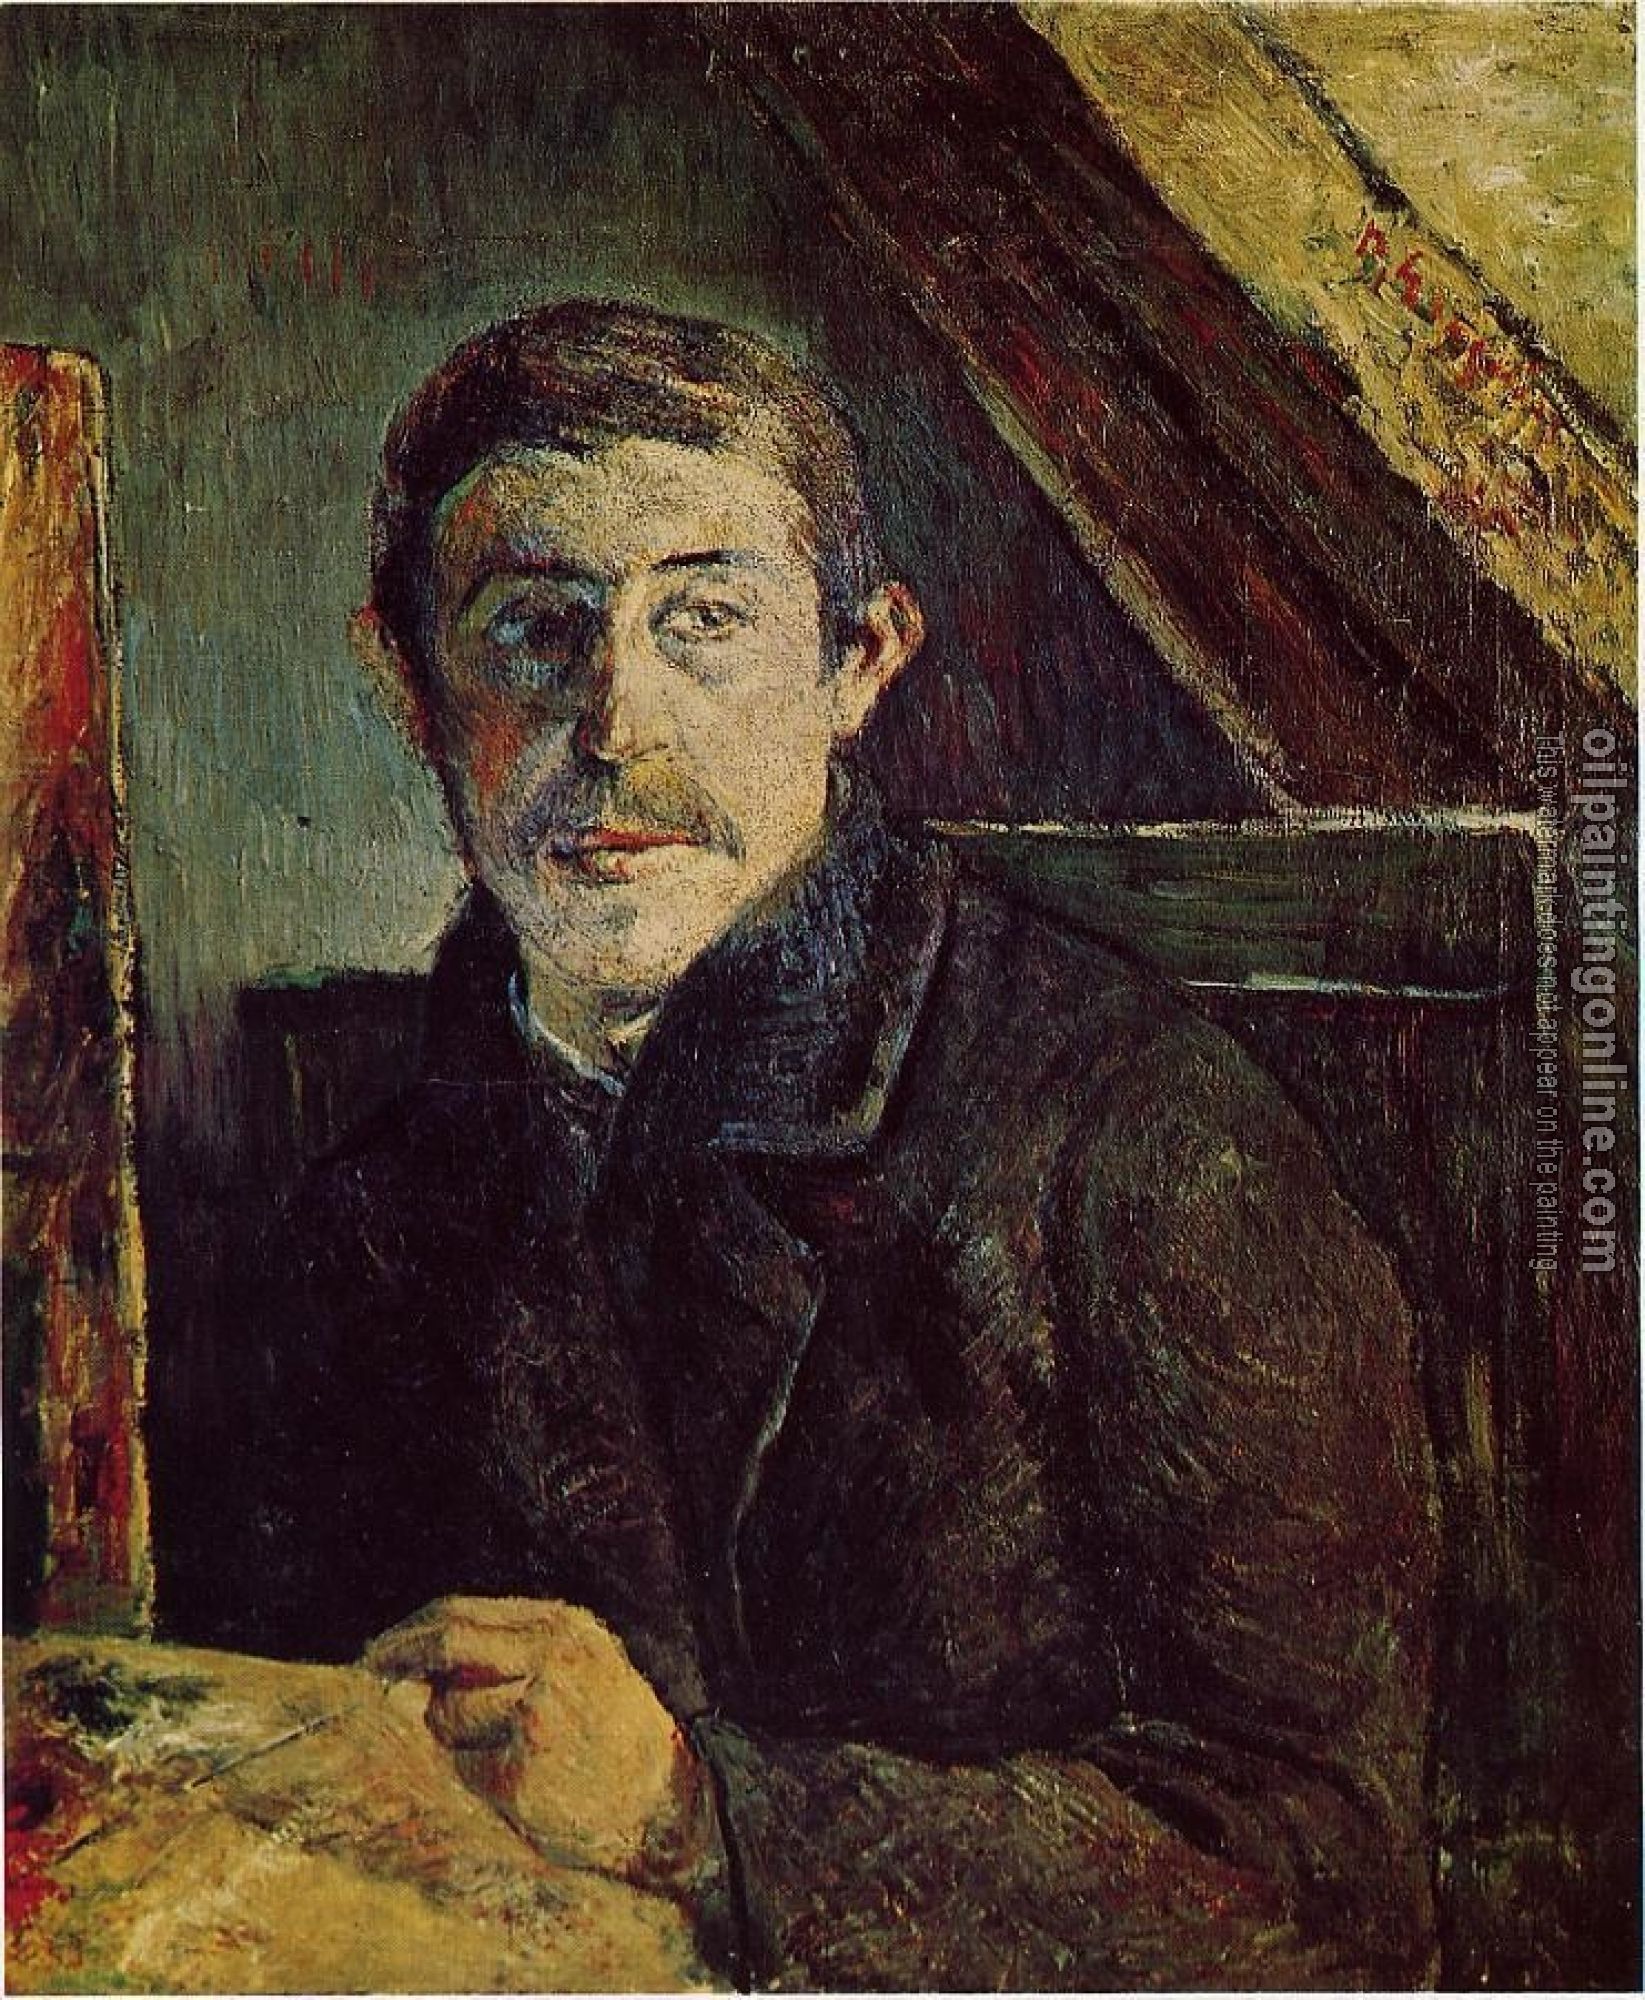 Gauguin, Paul - Gauguin at His Easel